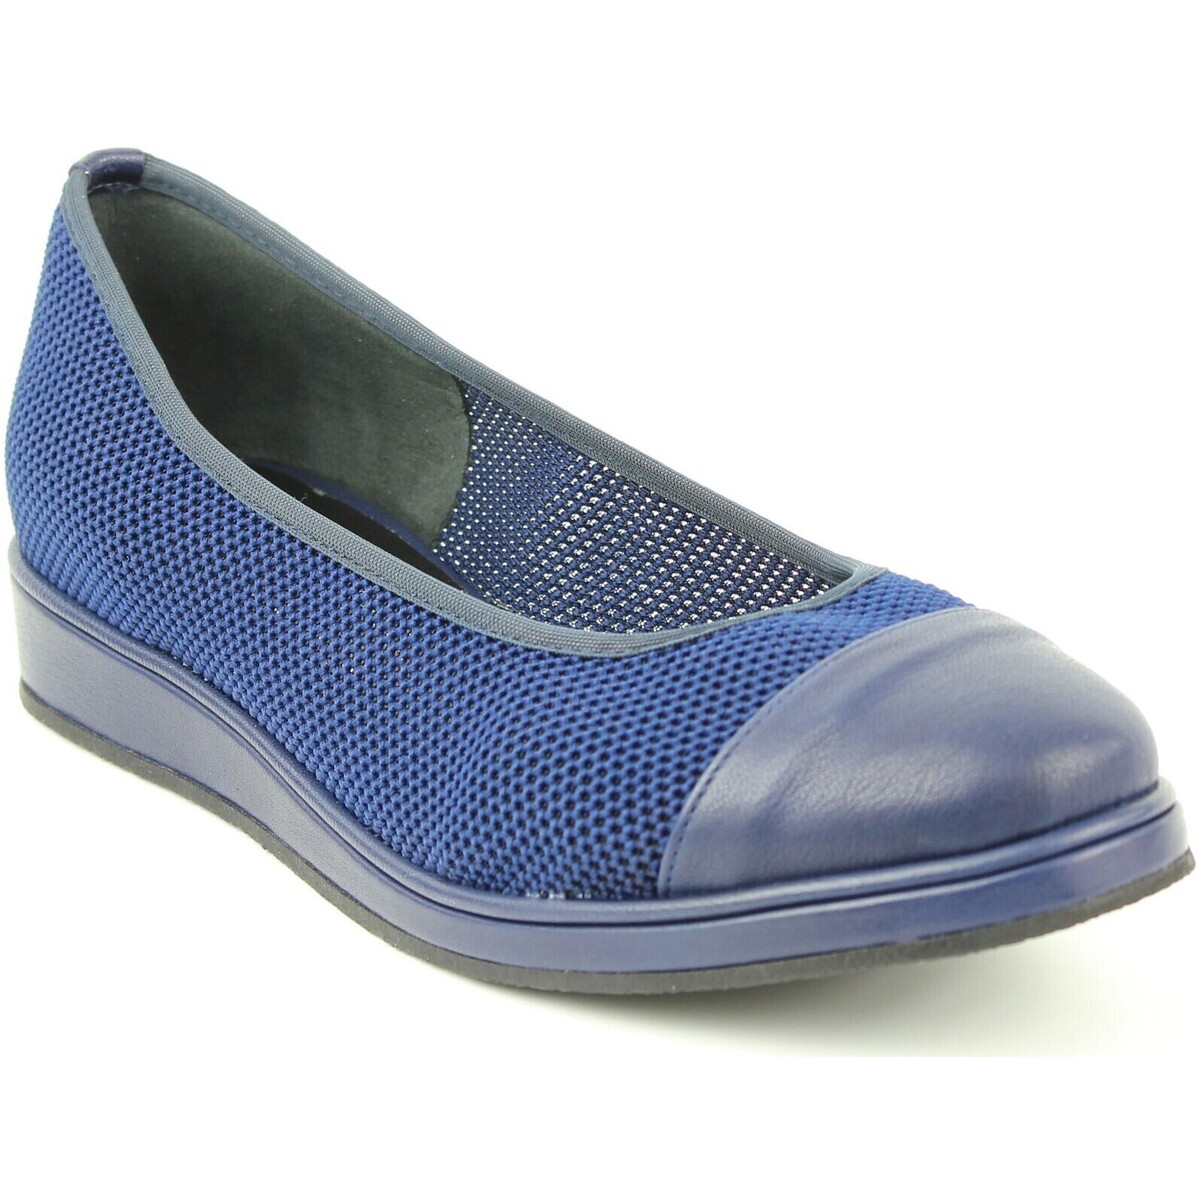 Chaussures Femme Escarpins Accessoire Diffusion Ballerines Bleu